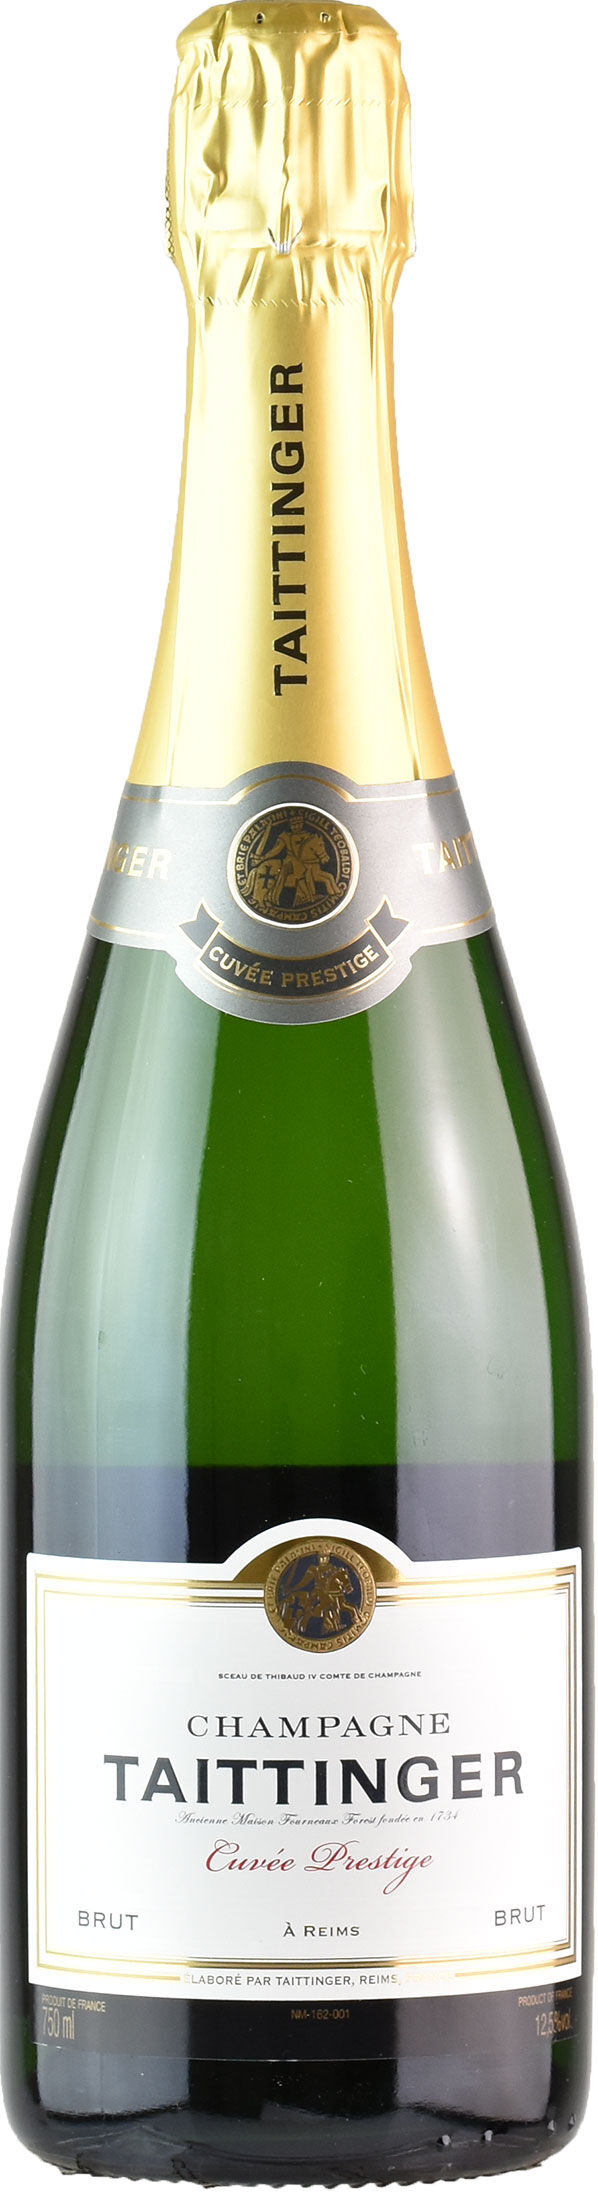 Taittinger Champagne Cuvée Prestige Brut